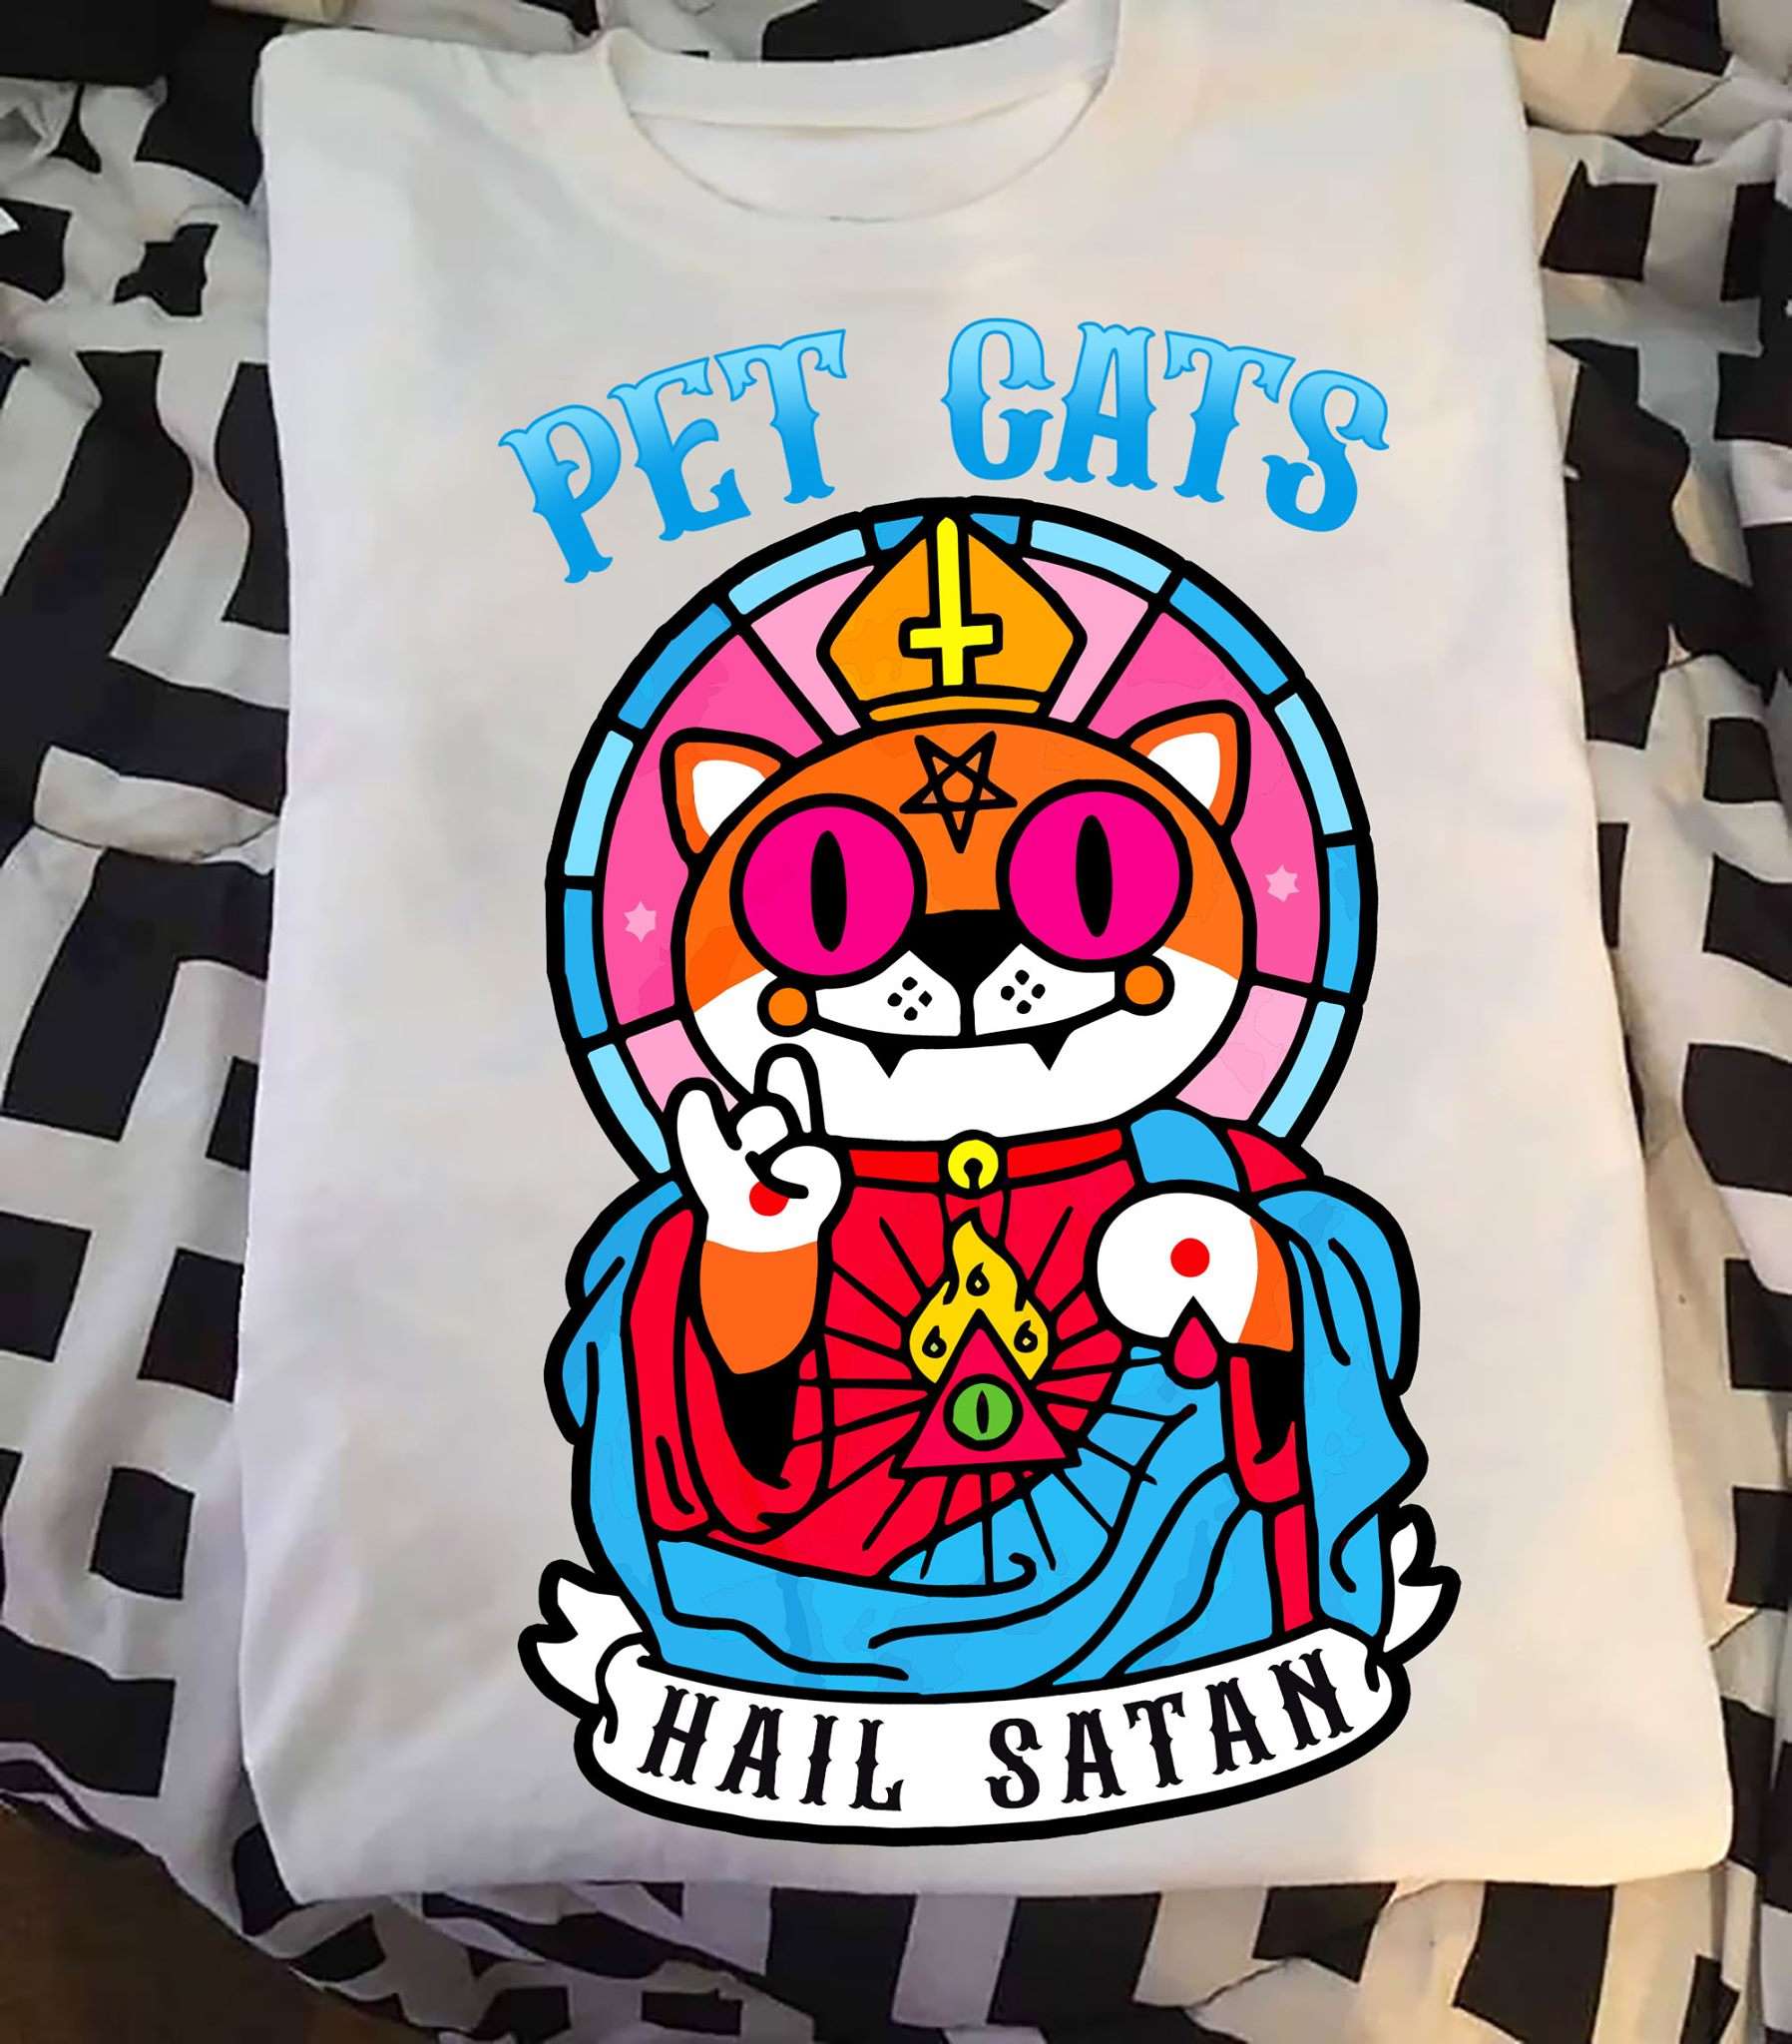 Pet cats, Hail Satan - The Satan cat version, gift for cat person